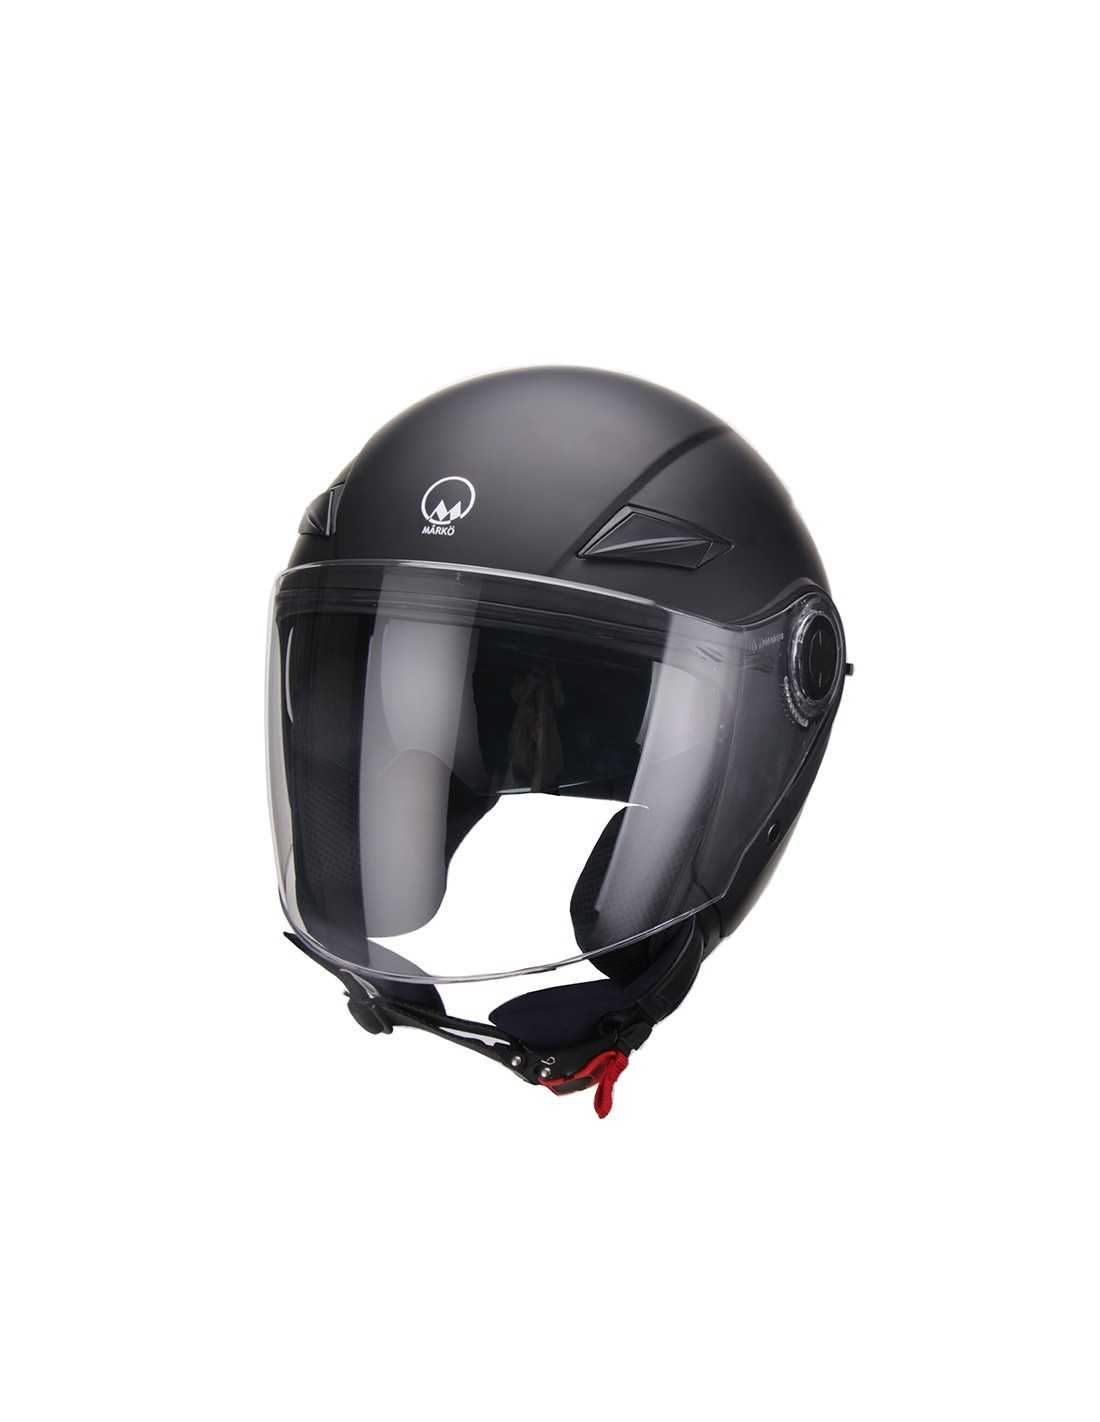 https://marko-helmets.com/2285-thickbox_default/casque-jet-electron-marko-helmets.jpg